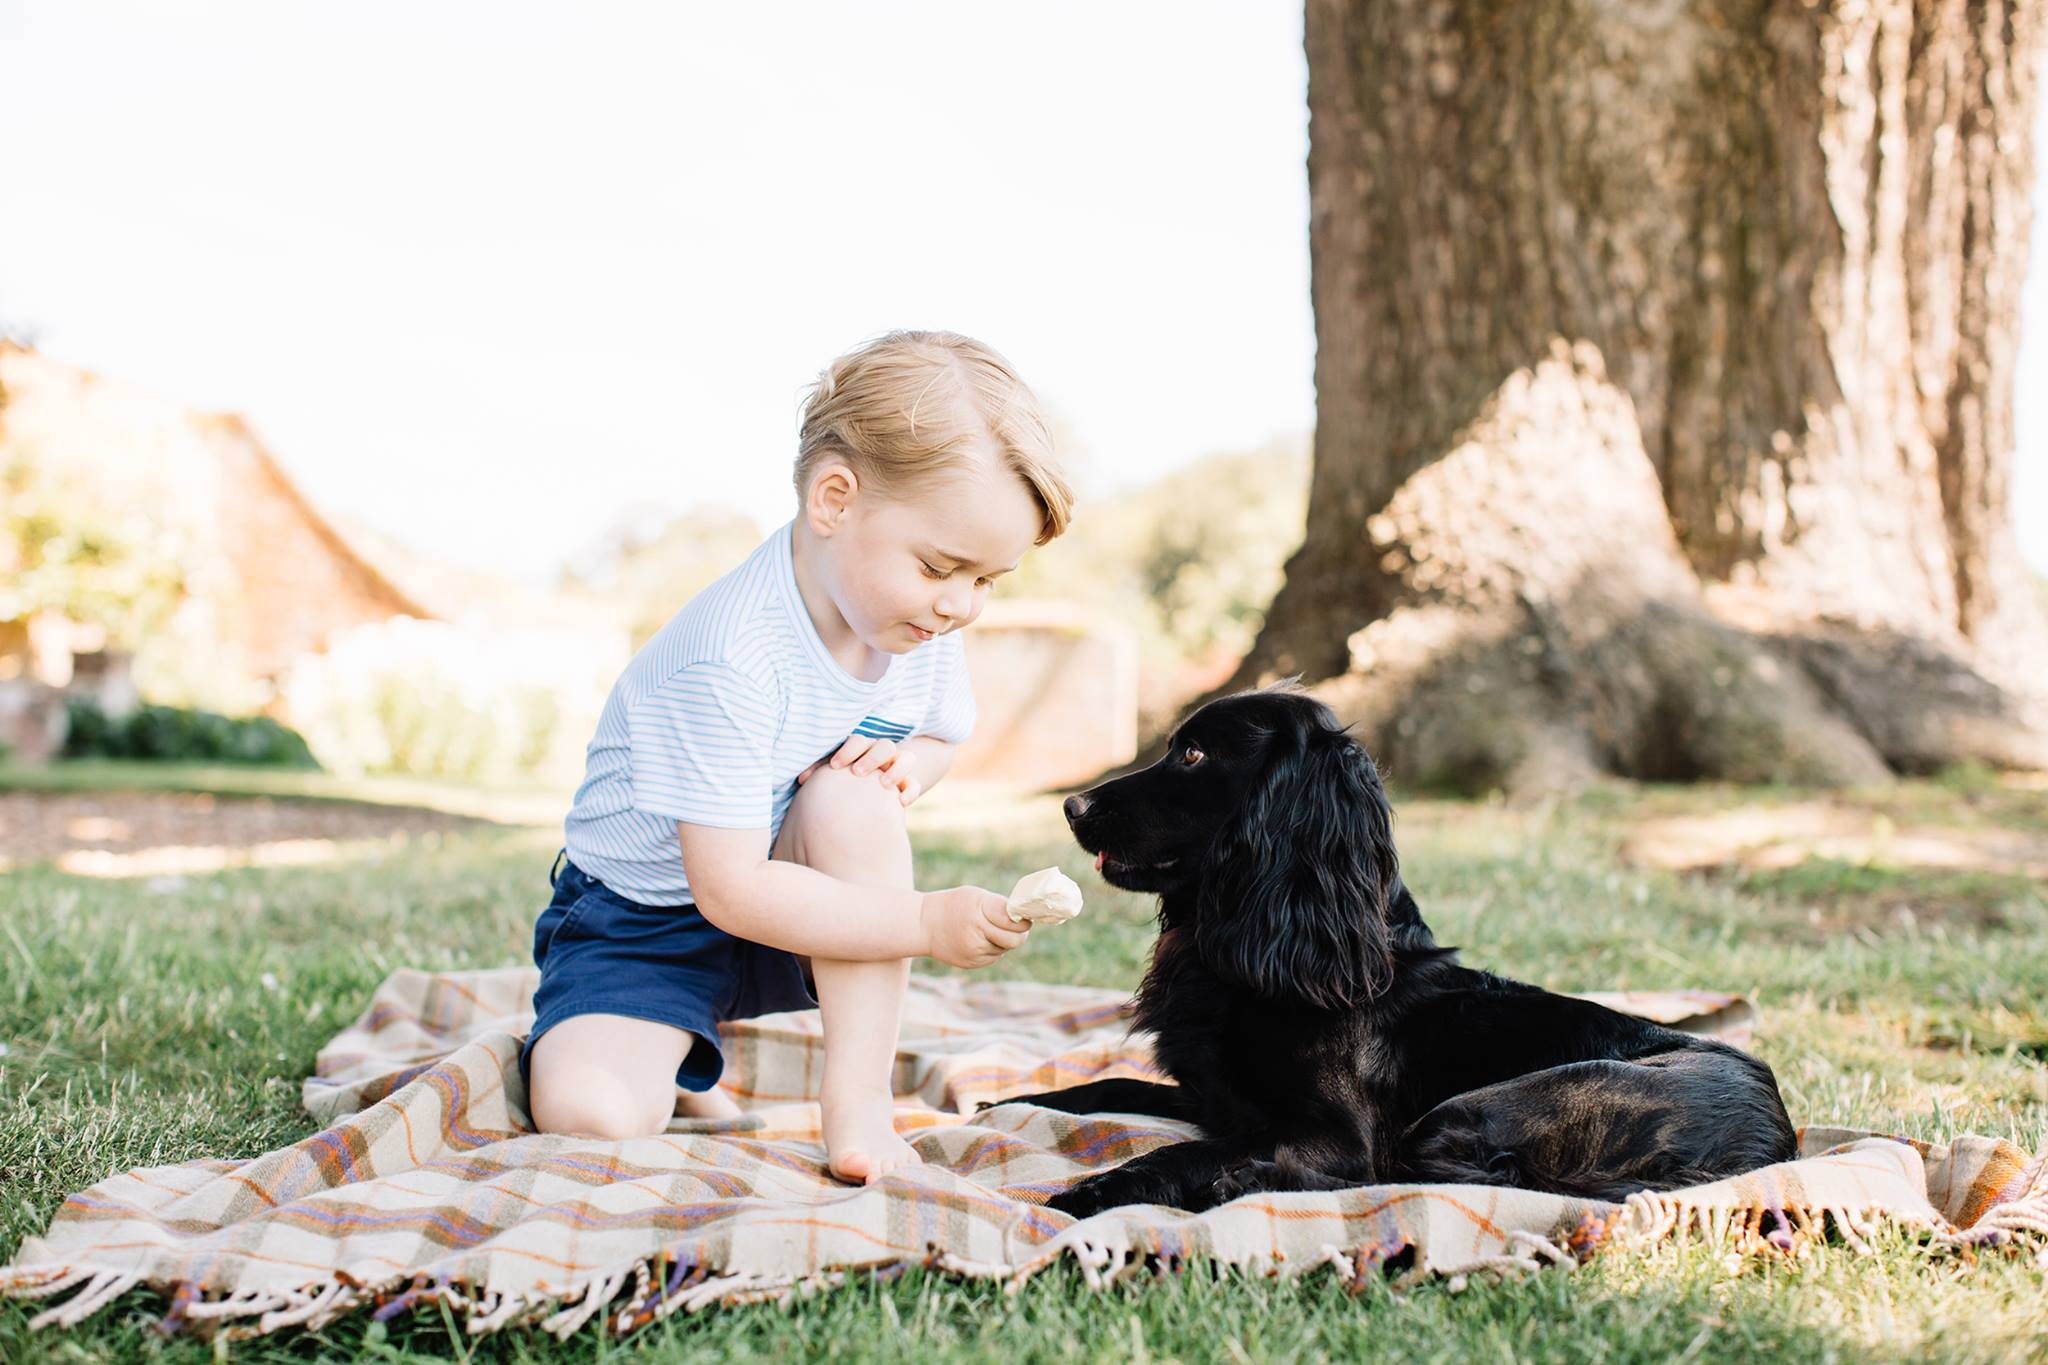 Piknik bersama Lupo, anjing keluarga. Foto oleh Facebook The Royal Family/Matt Porteous  